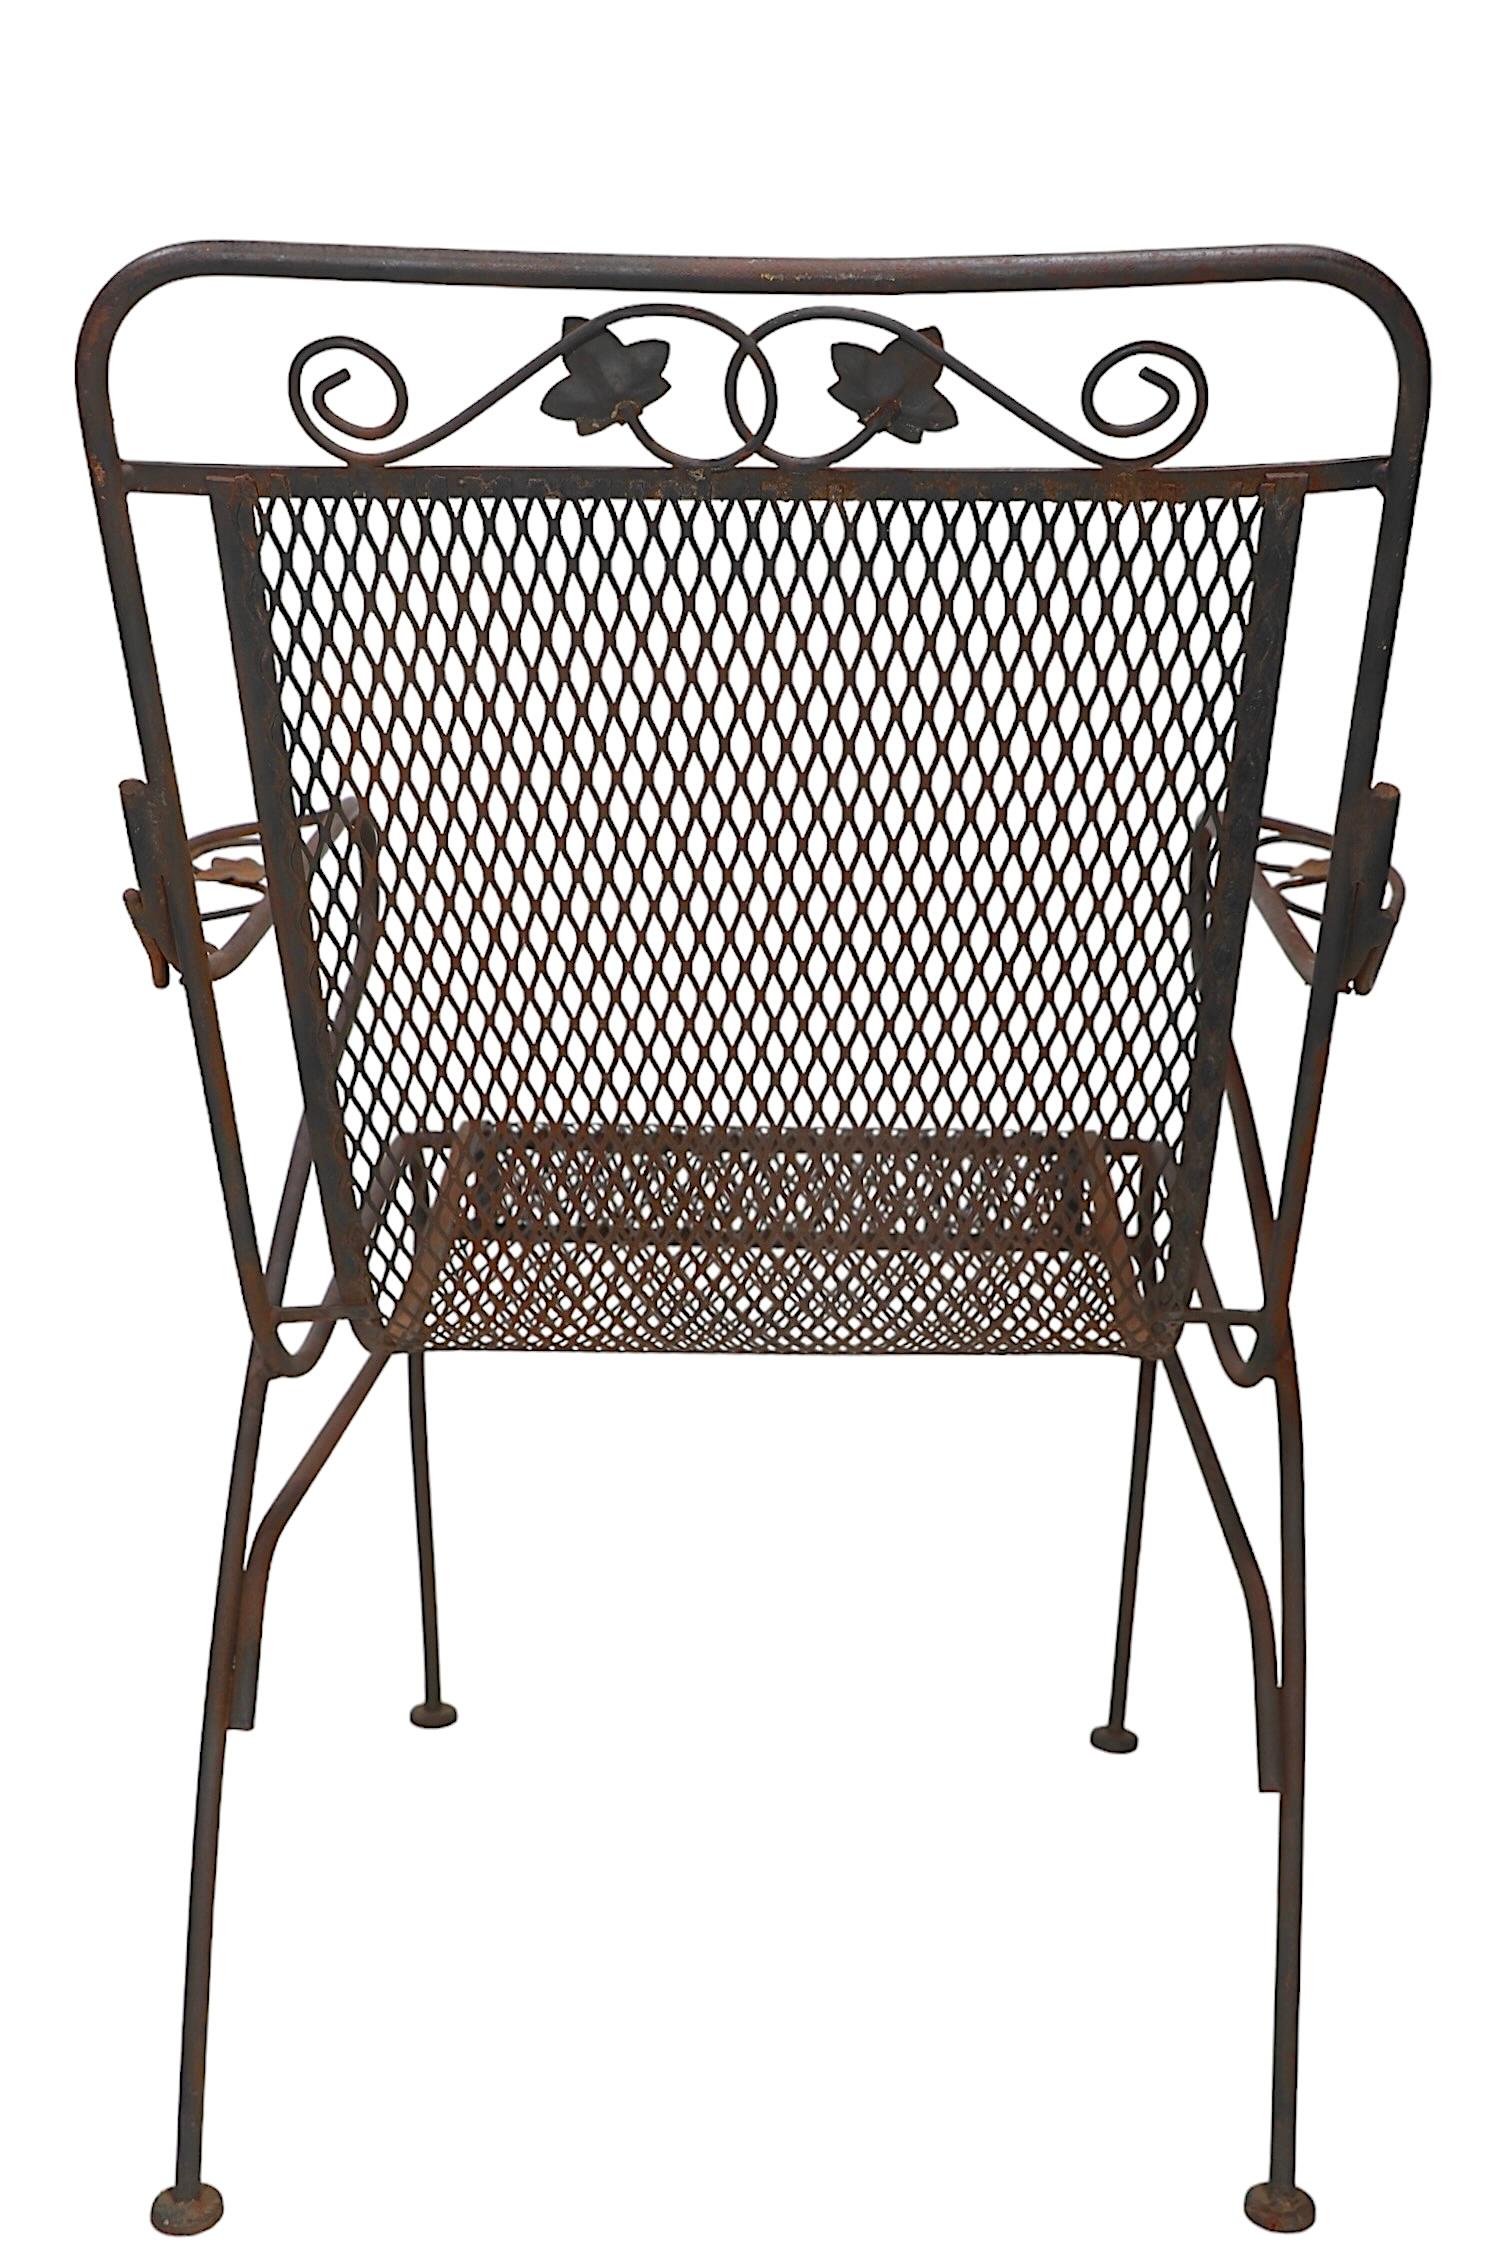 American Wrought Iron Garden Patio Poolside Arm Lounge Chair att. to Salterini